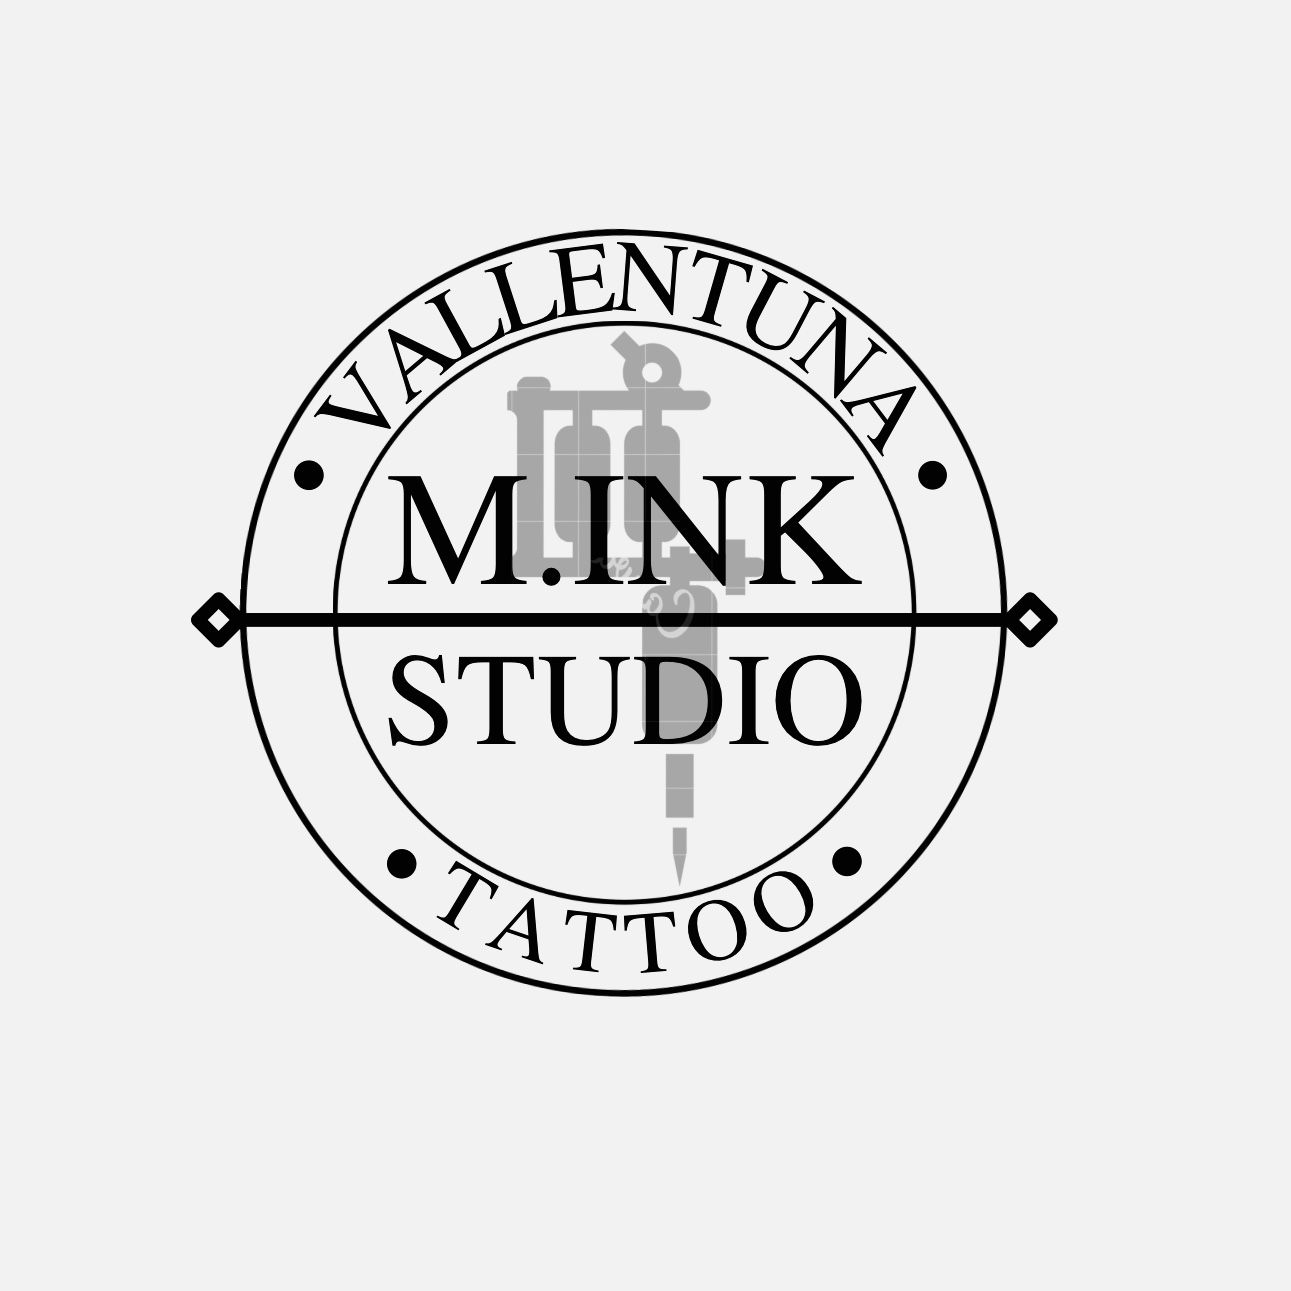 Dream Art Tattoo Studio | PAIN LESS TATTOOS - YouTube